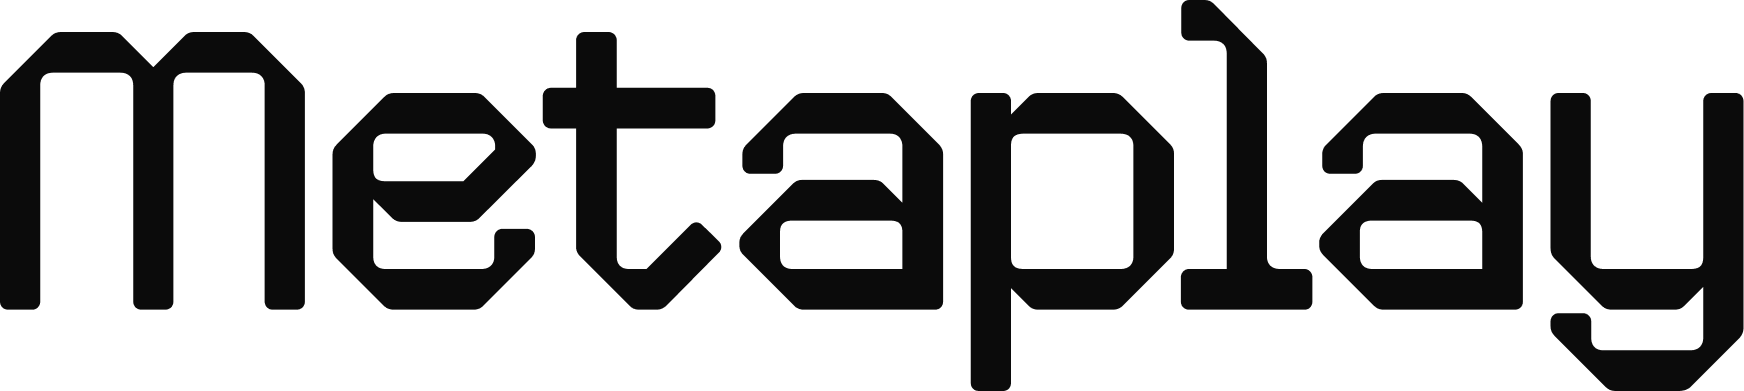 Metaplay logo